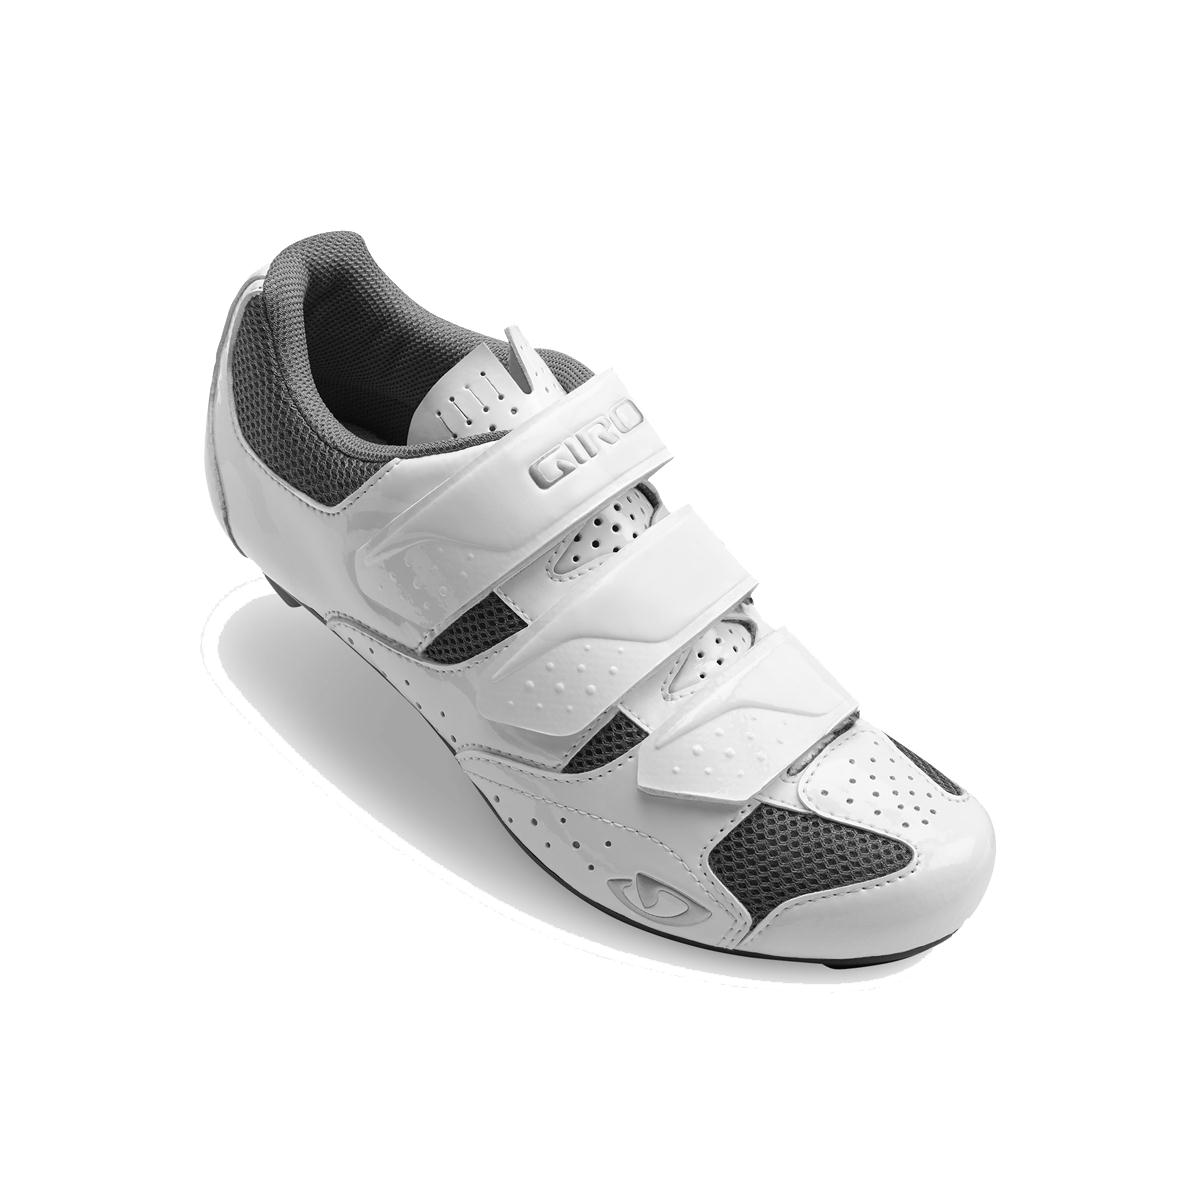 GIRO Techne Womens Road Cycling Shoes 2018 White/Silver 36